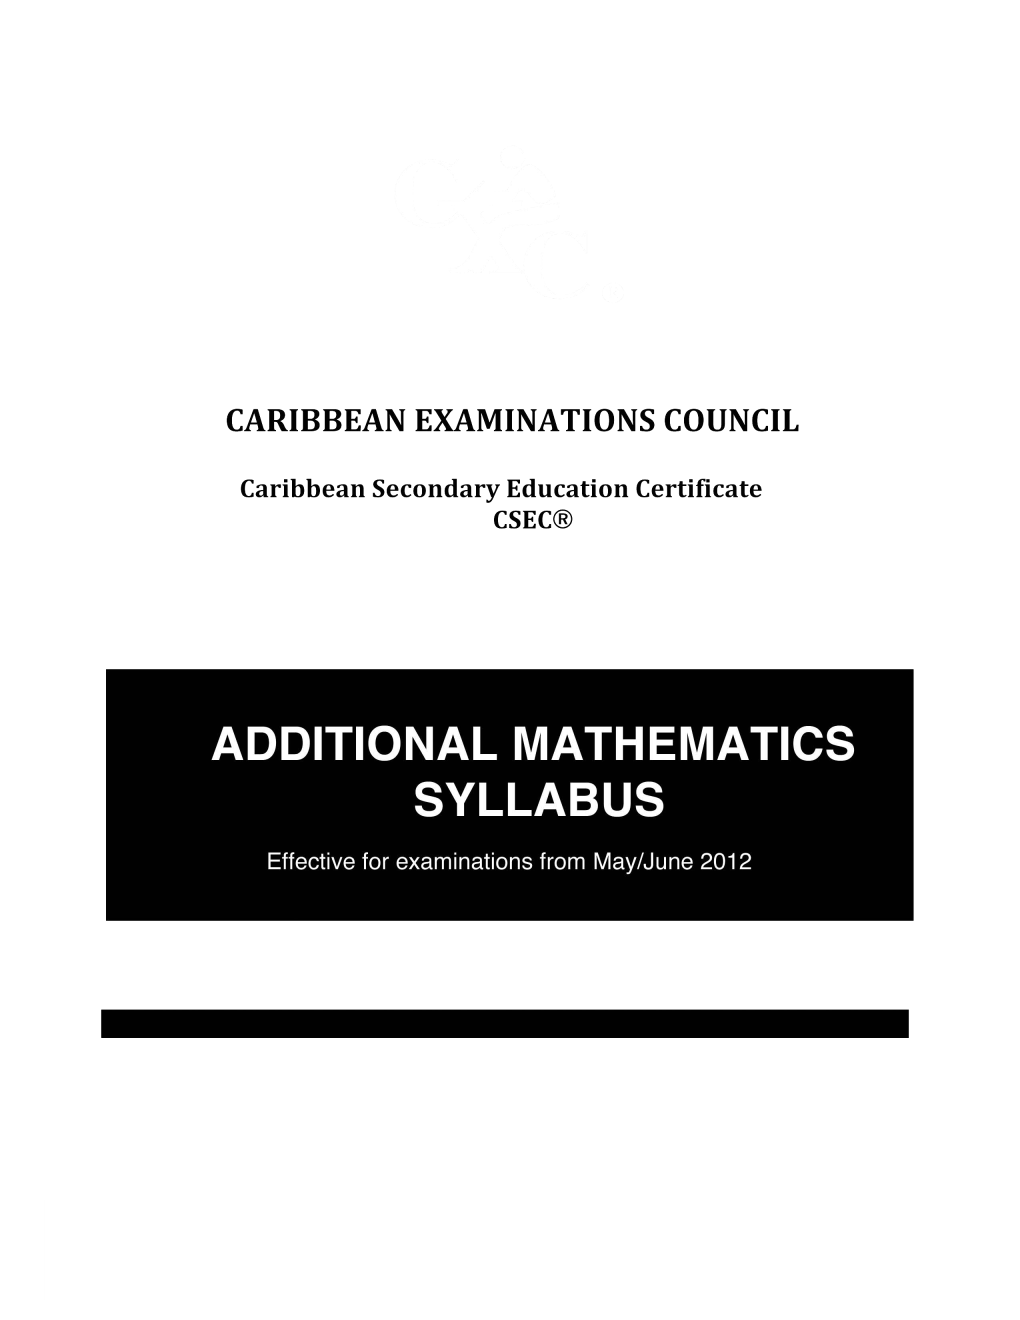 Additional Mathematics Syllabus